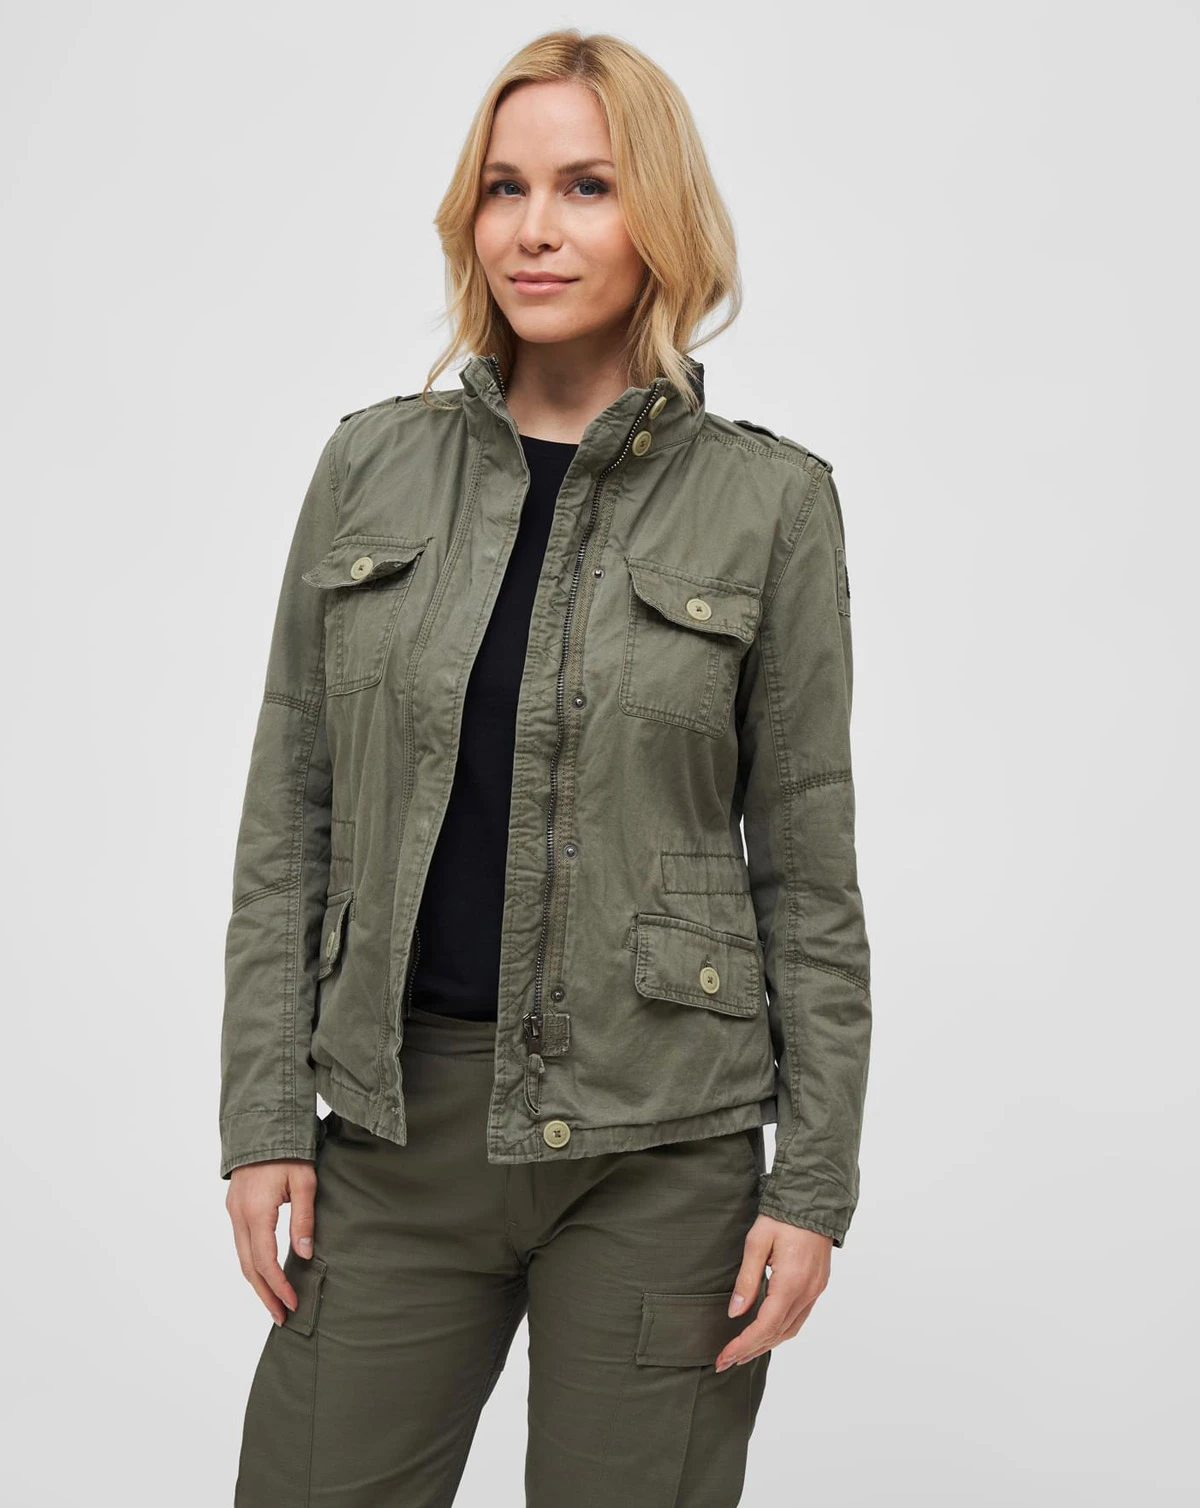 | Army BDU Uniform women Star | Battle Jackets for Jackets Dress